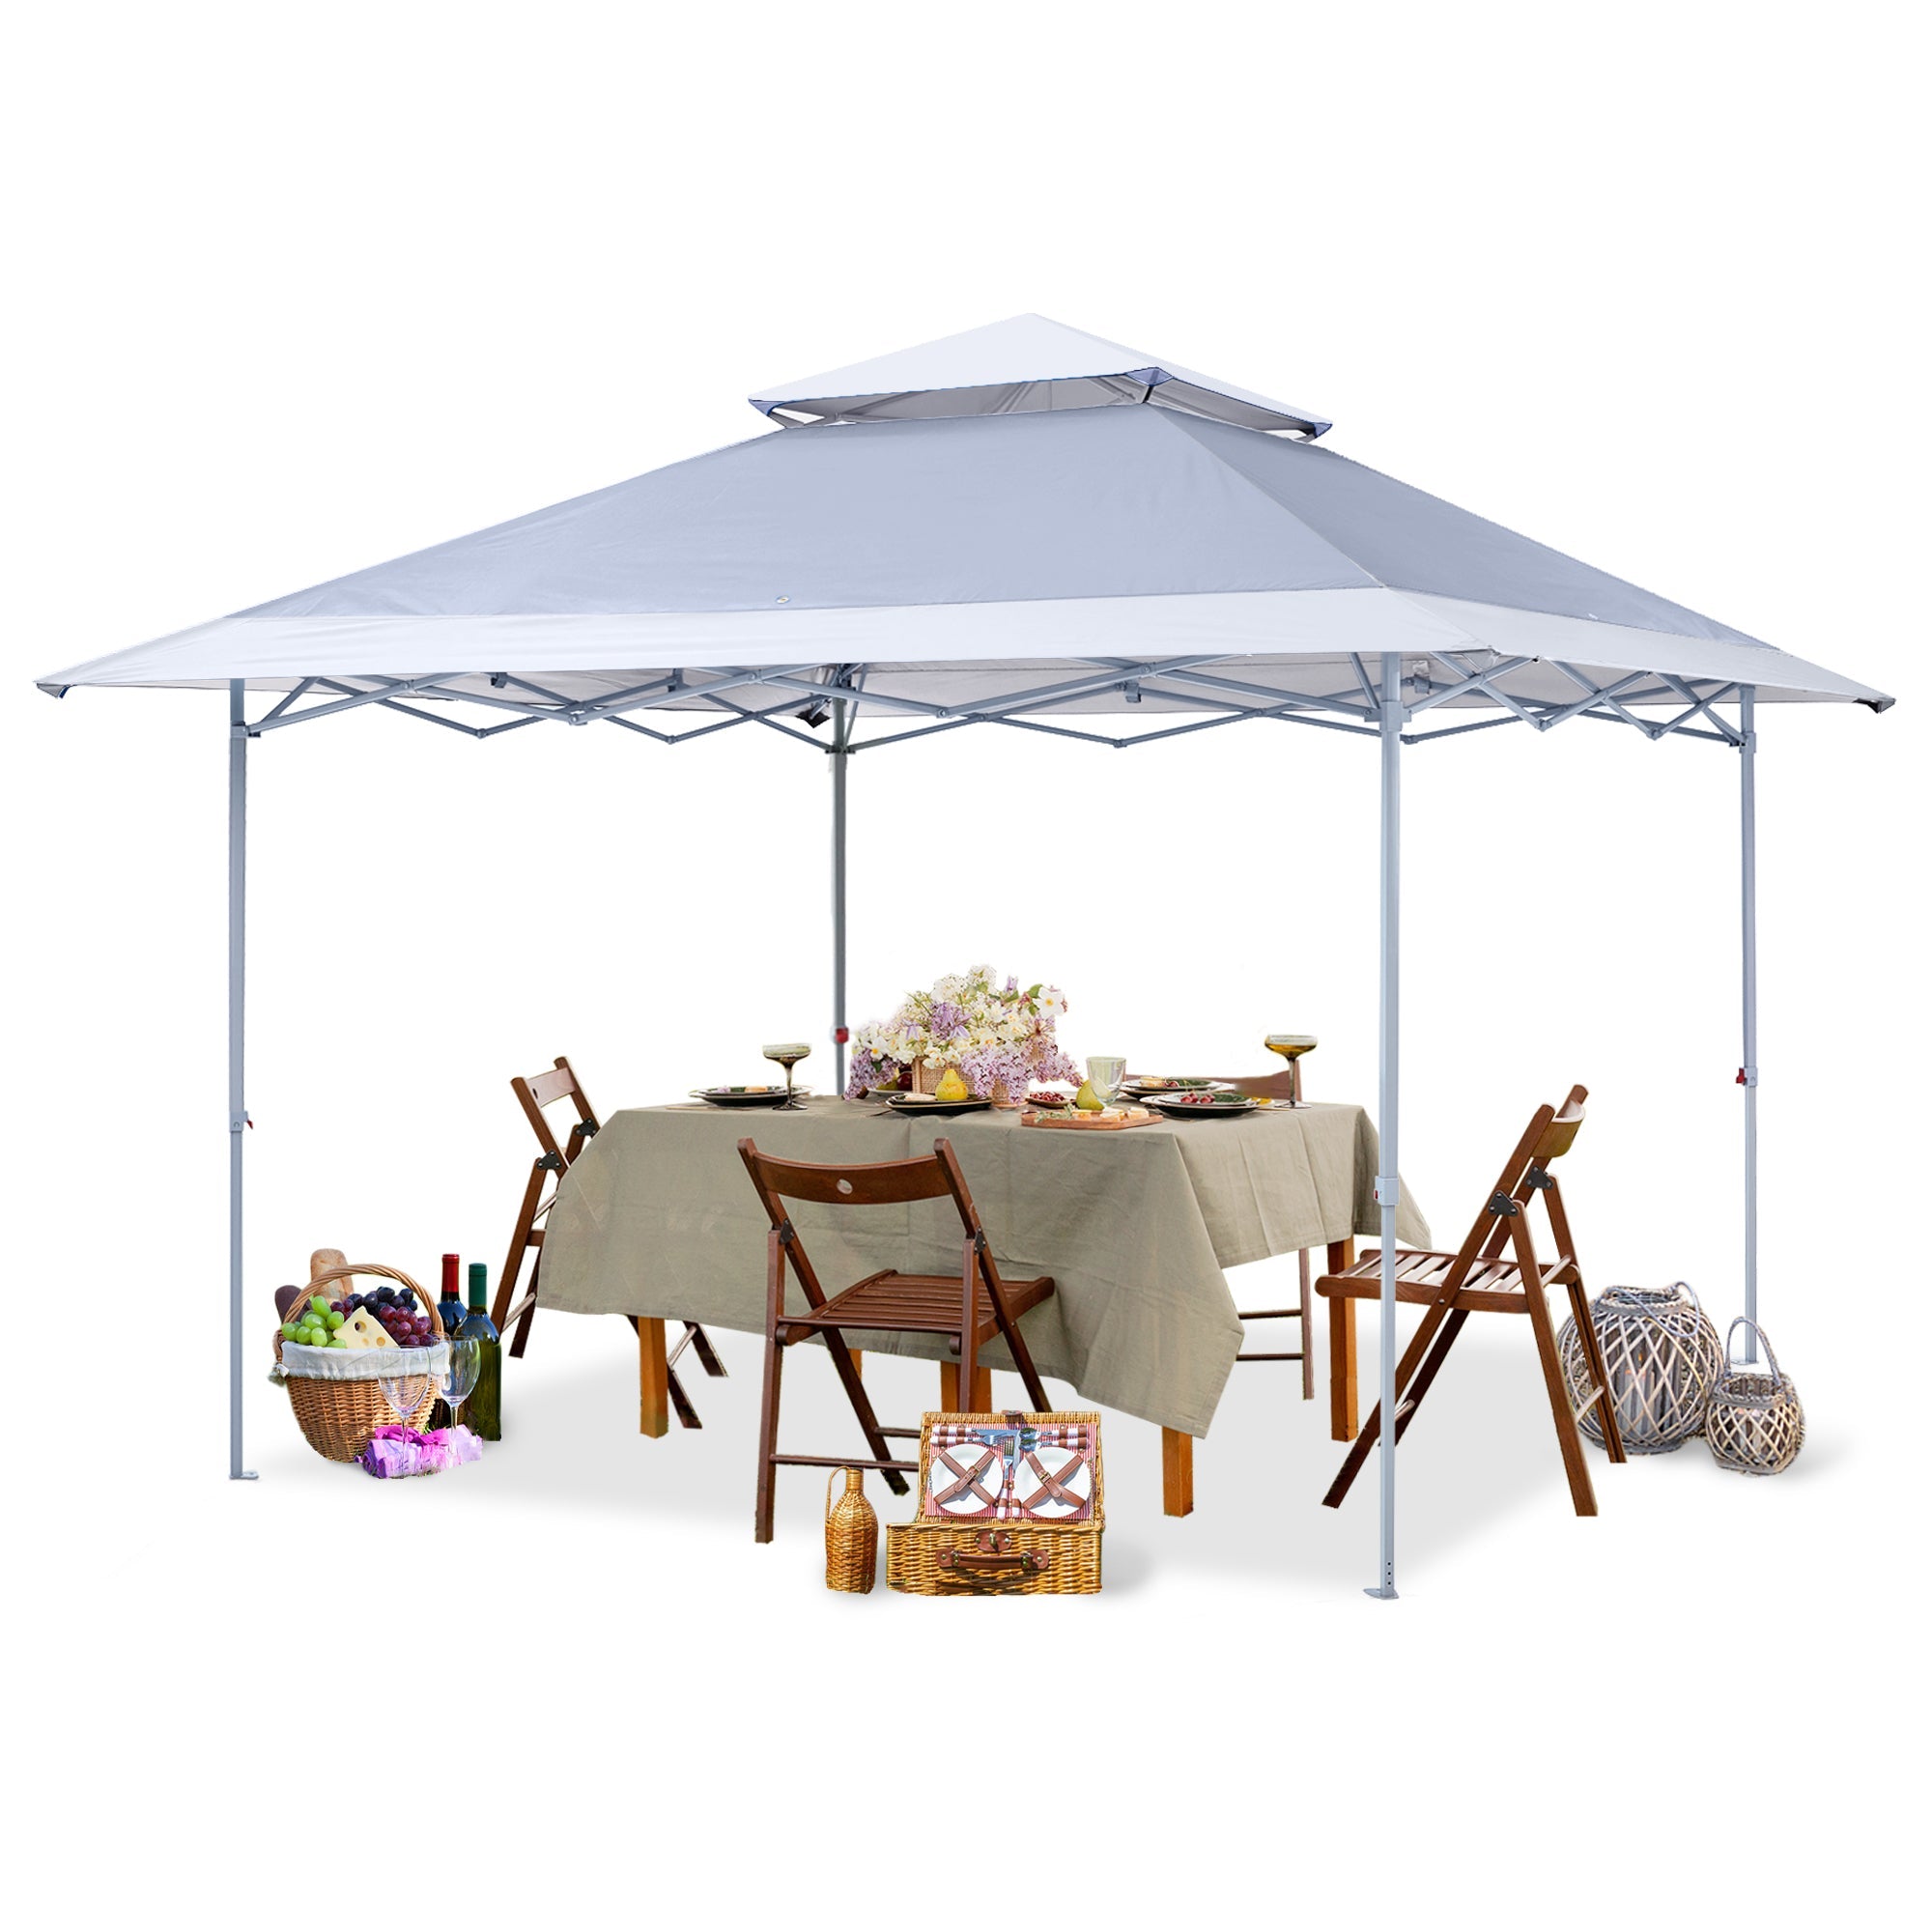 ABCCANOPY 13 ft x13 ft Outdoor Gazebo Pop up Sun Shade Canopy Tent, Gray